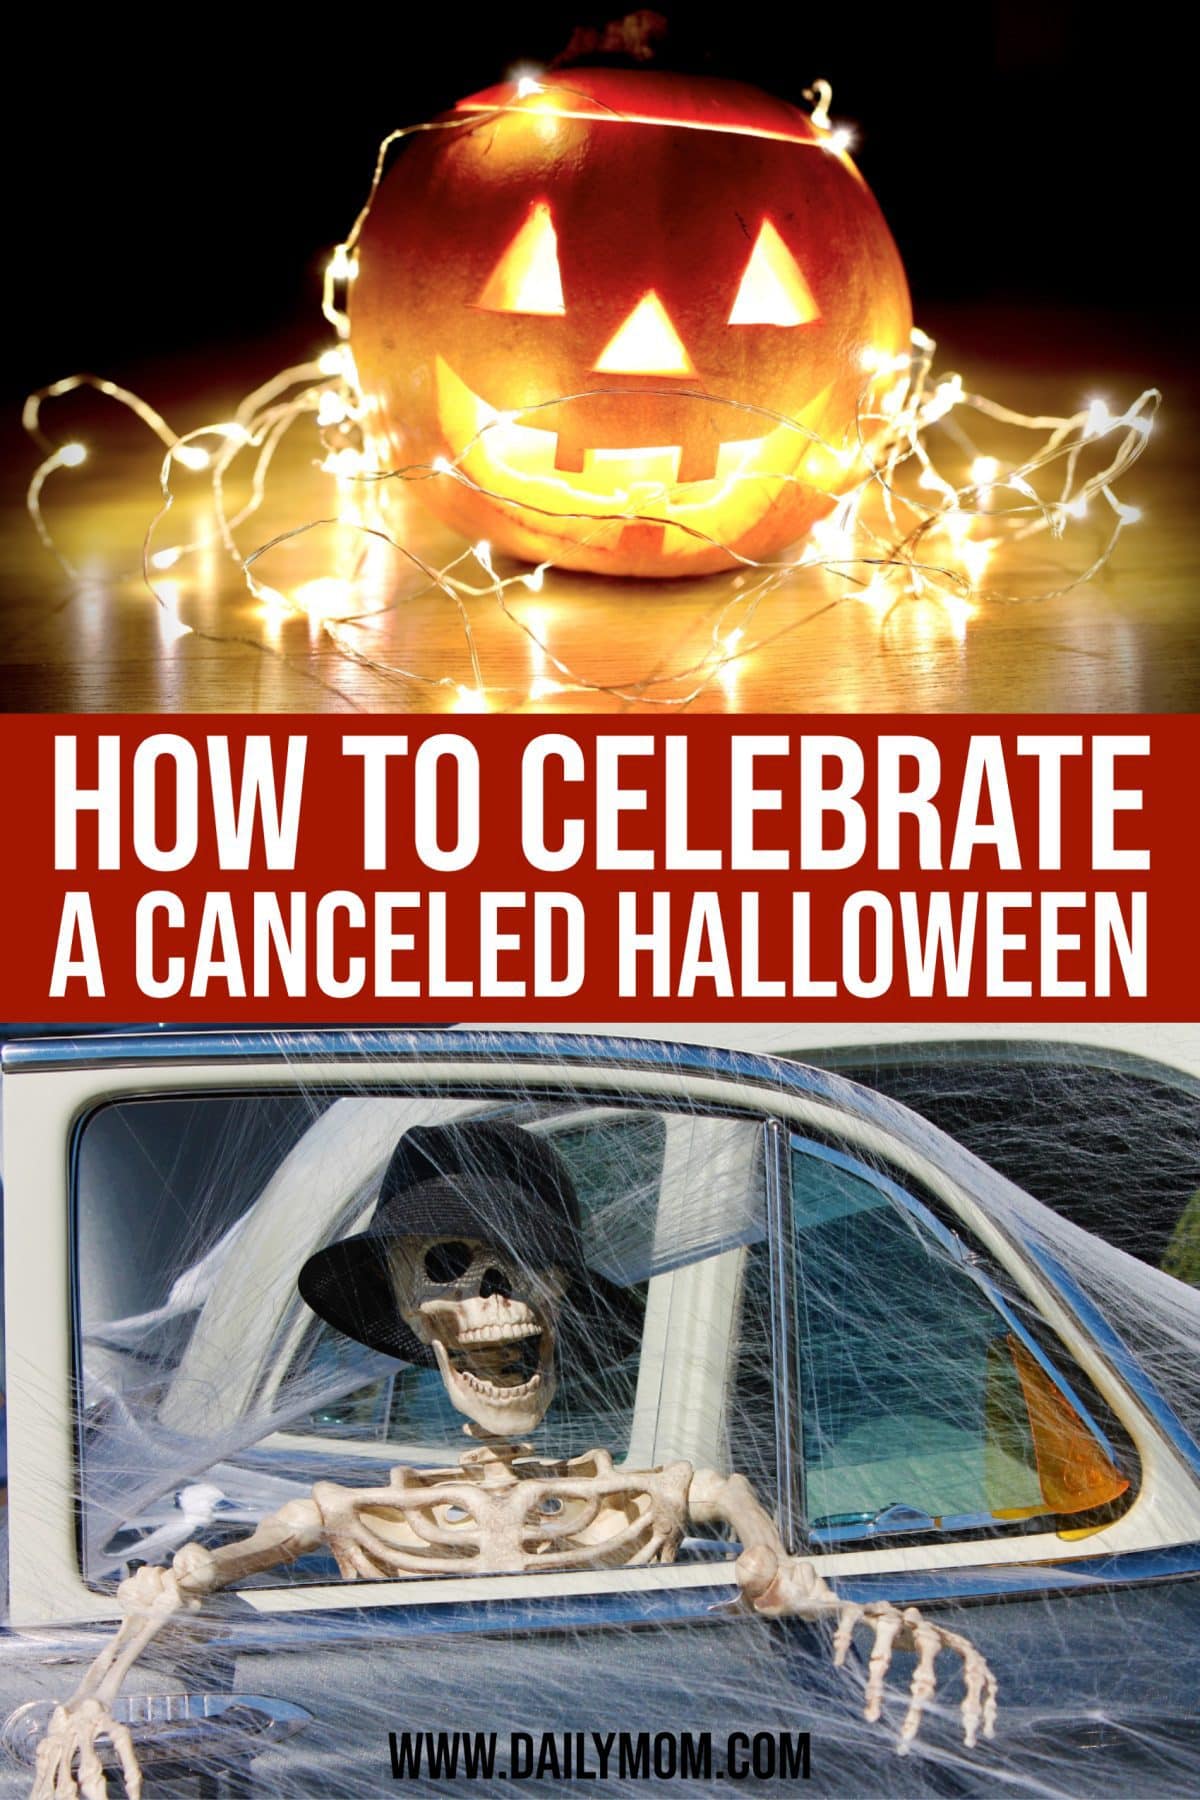 8 Ways To Celebrate A Canceled Halloween